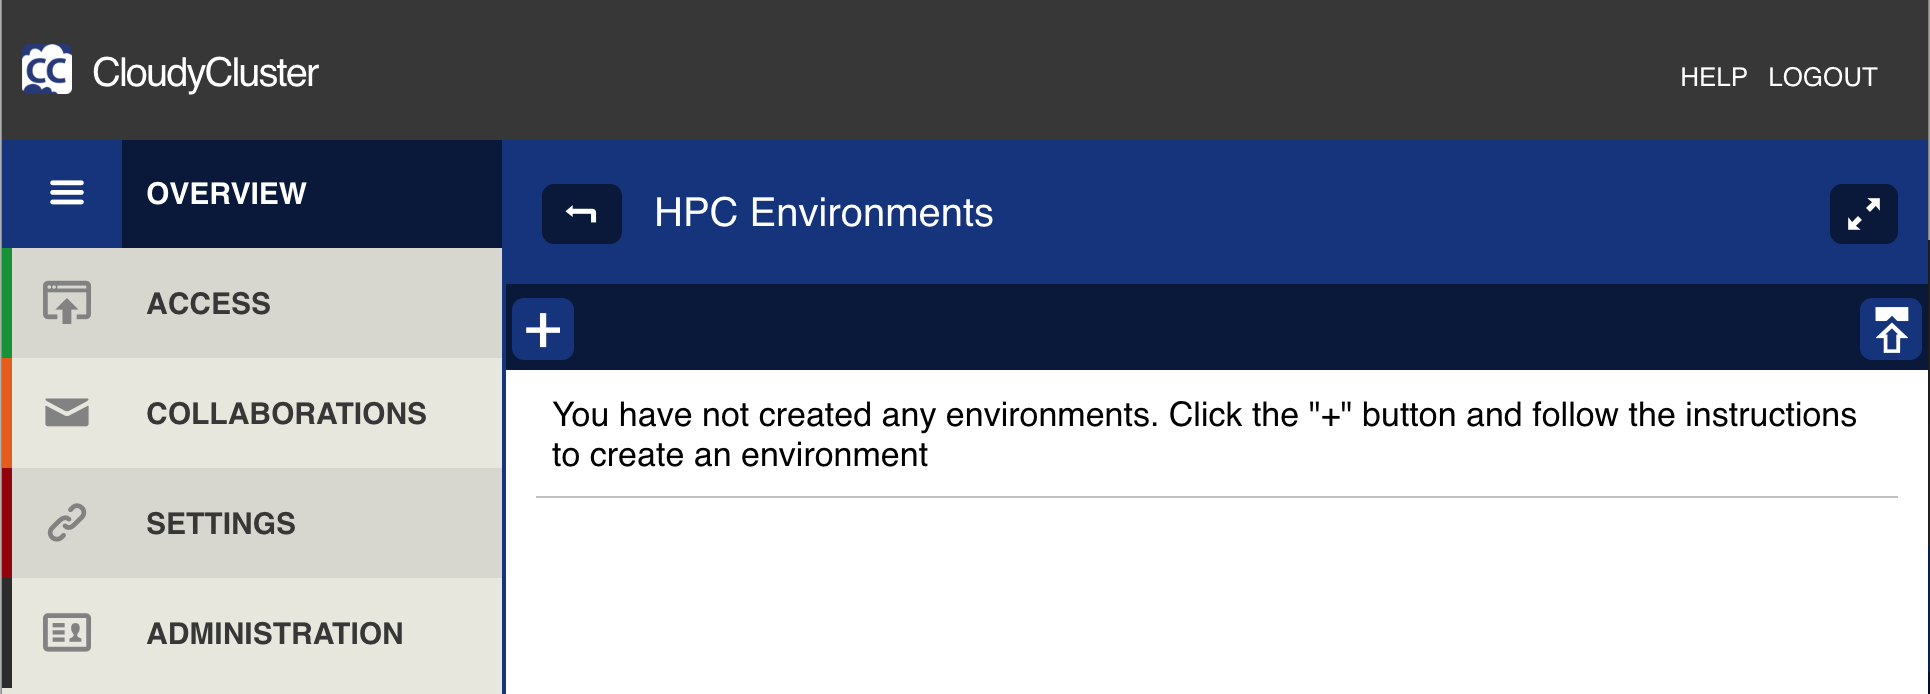 HPC Environment Deleted